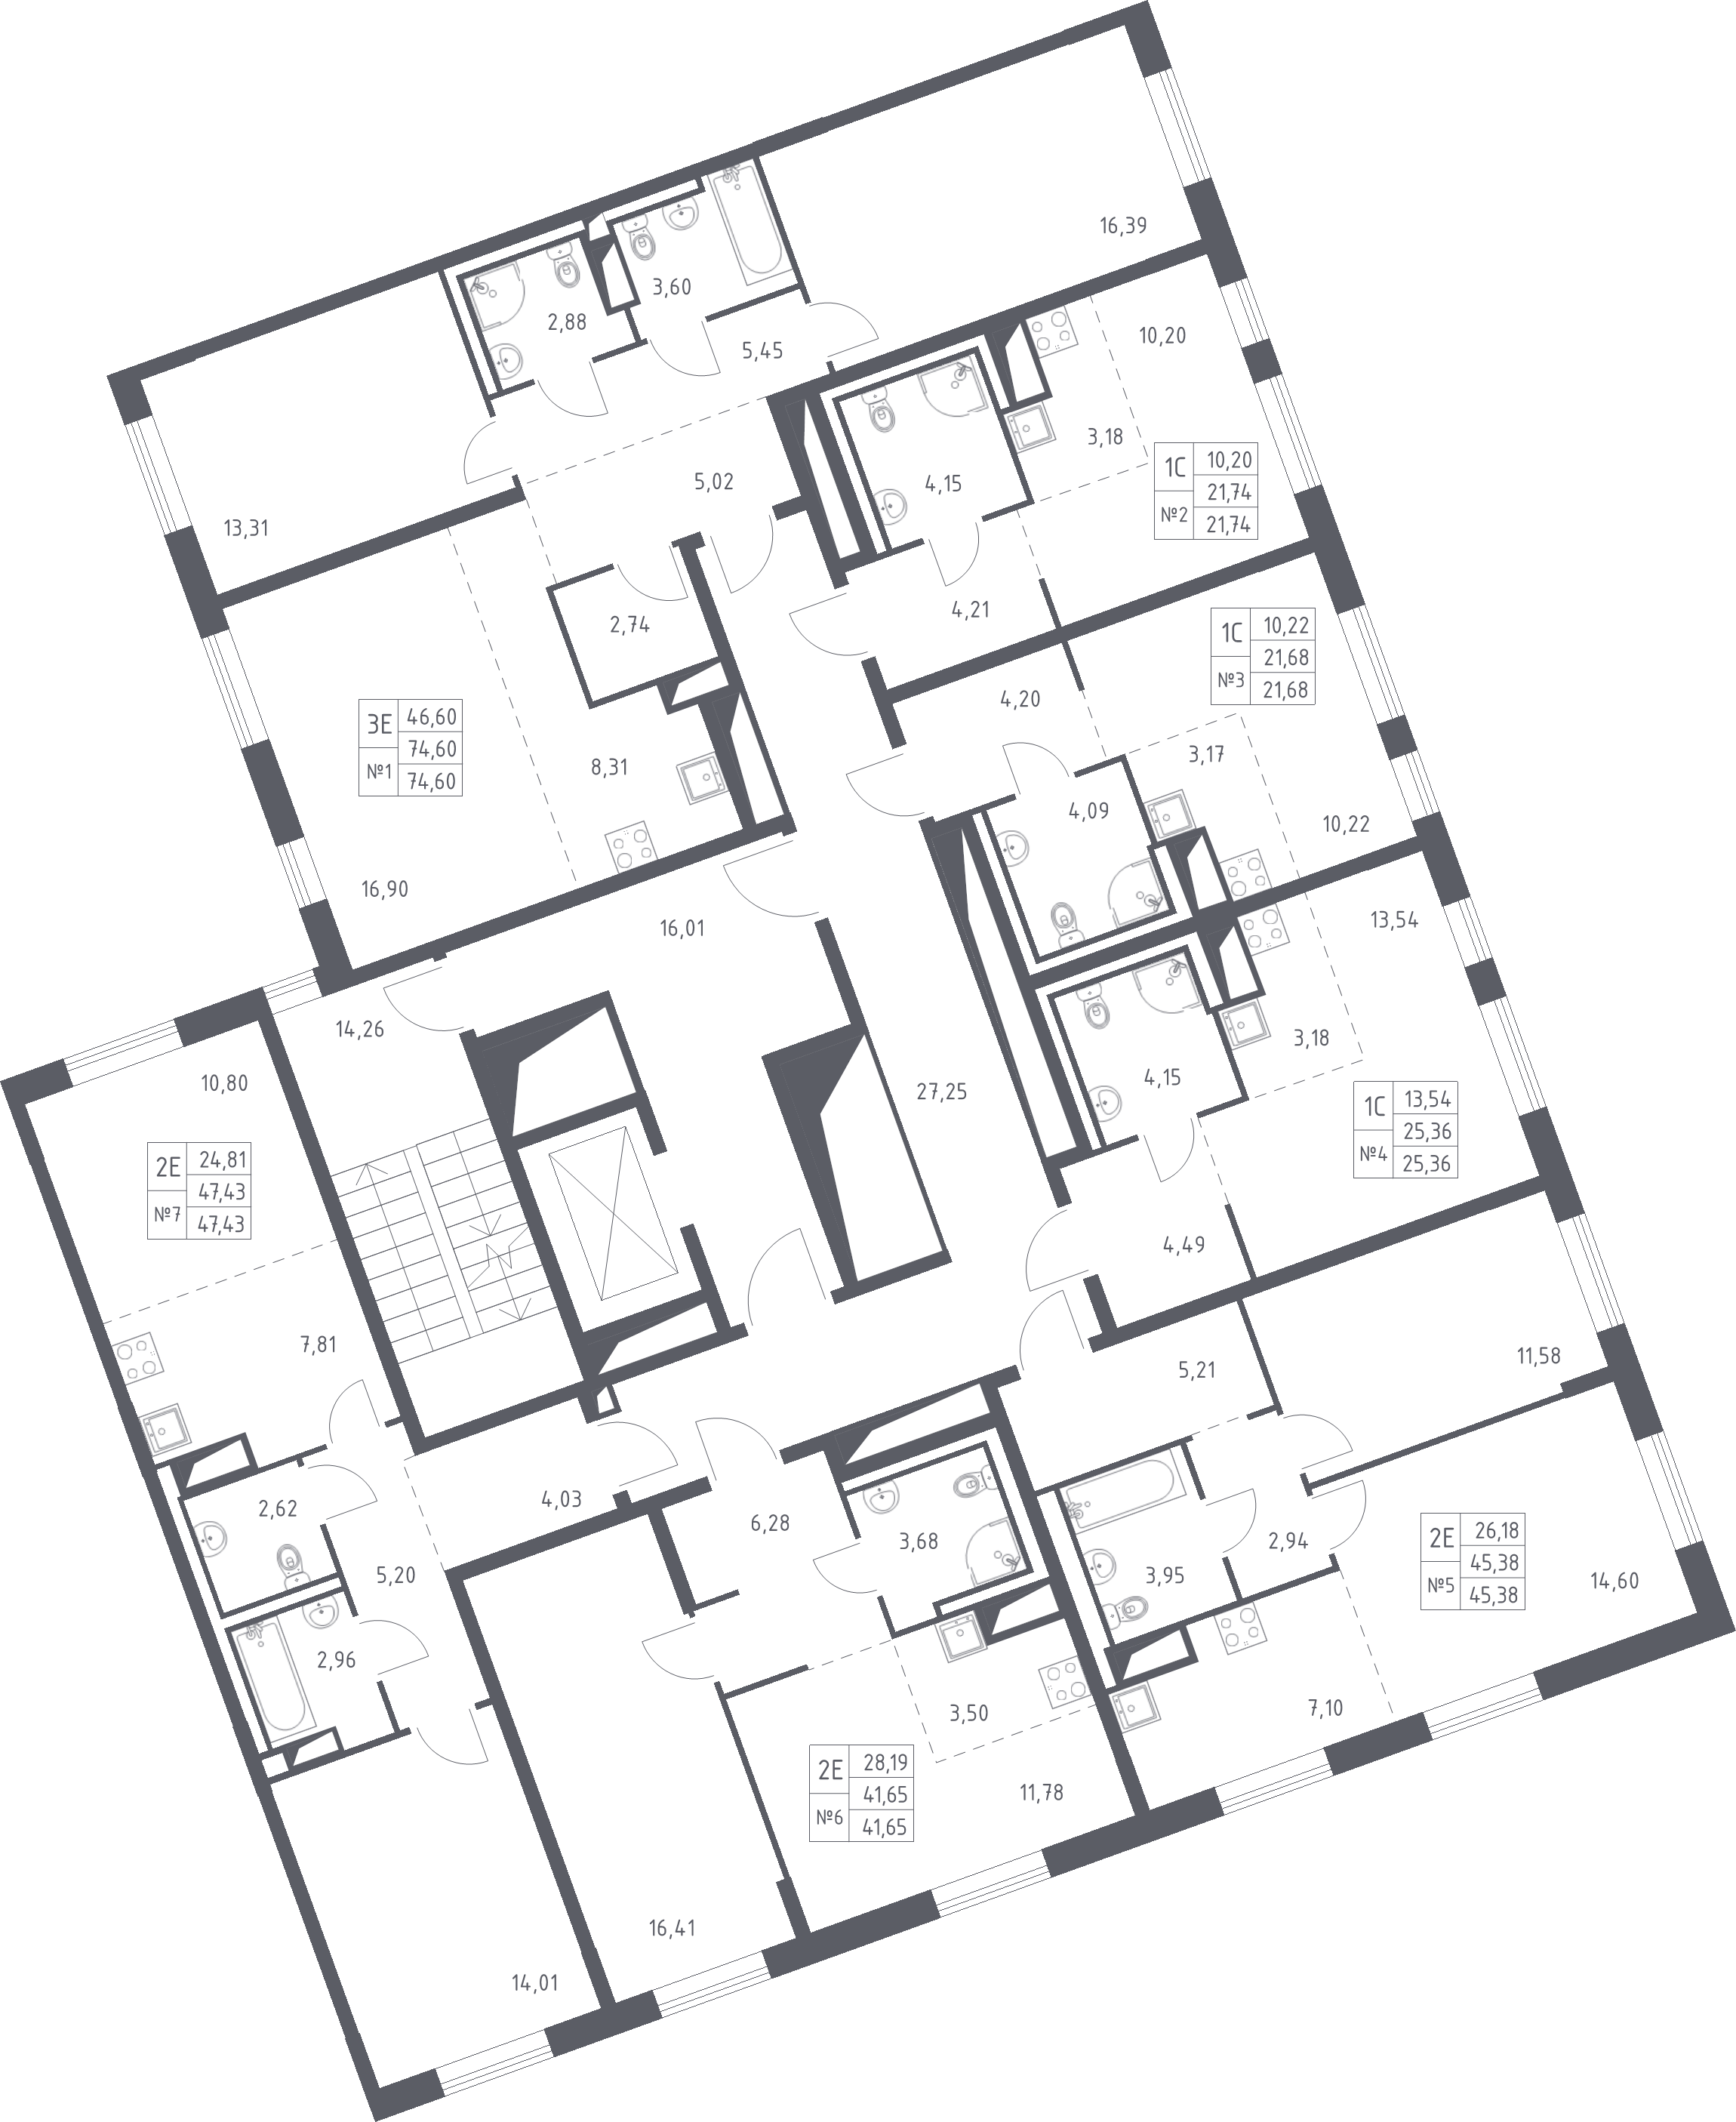 2-комнатная (Евро) квартира, 41.65 м² - планировка этажа